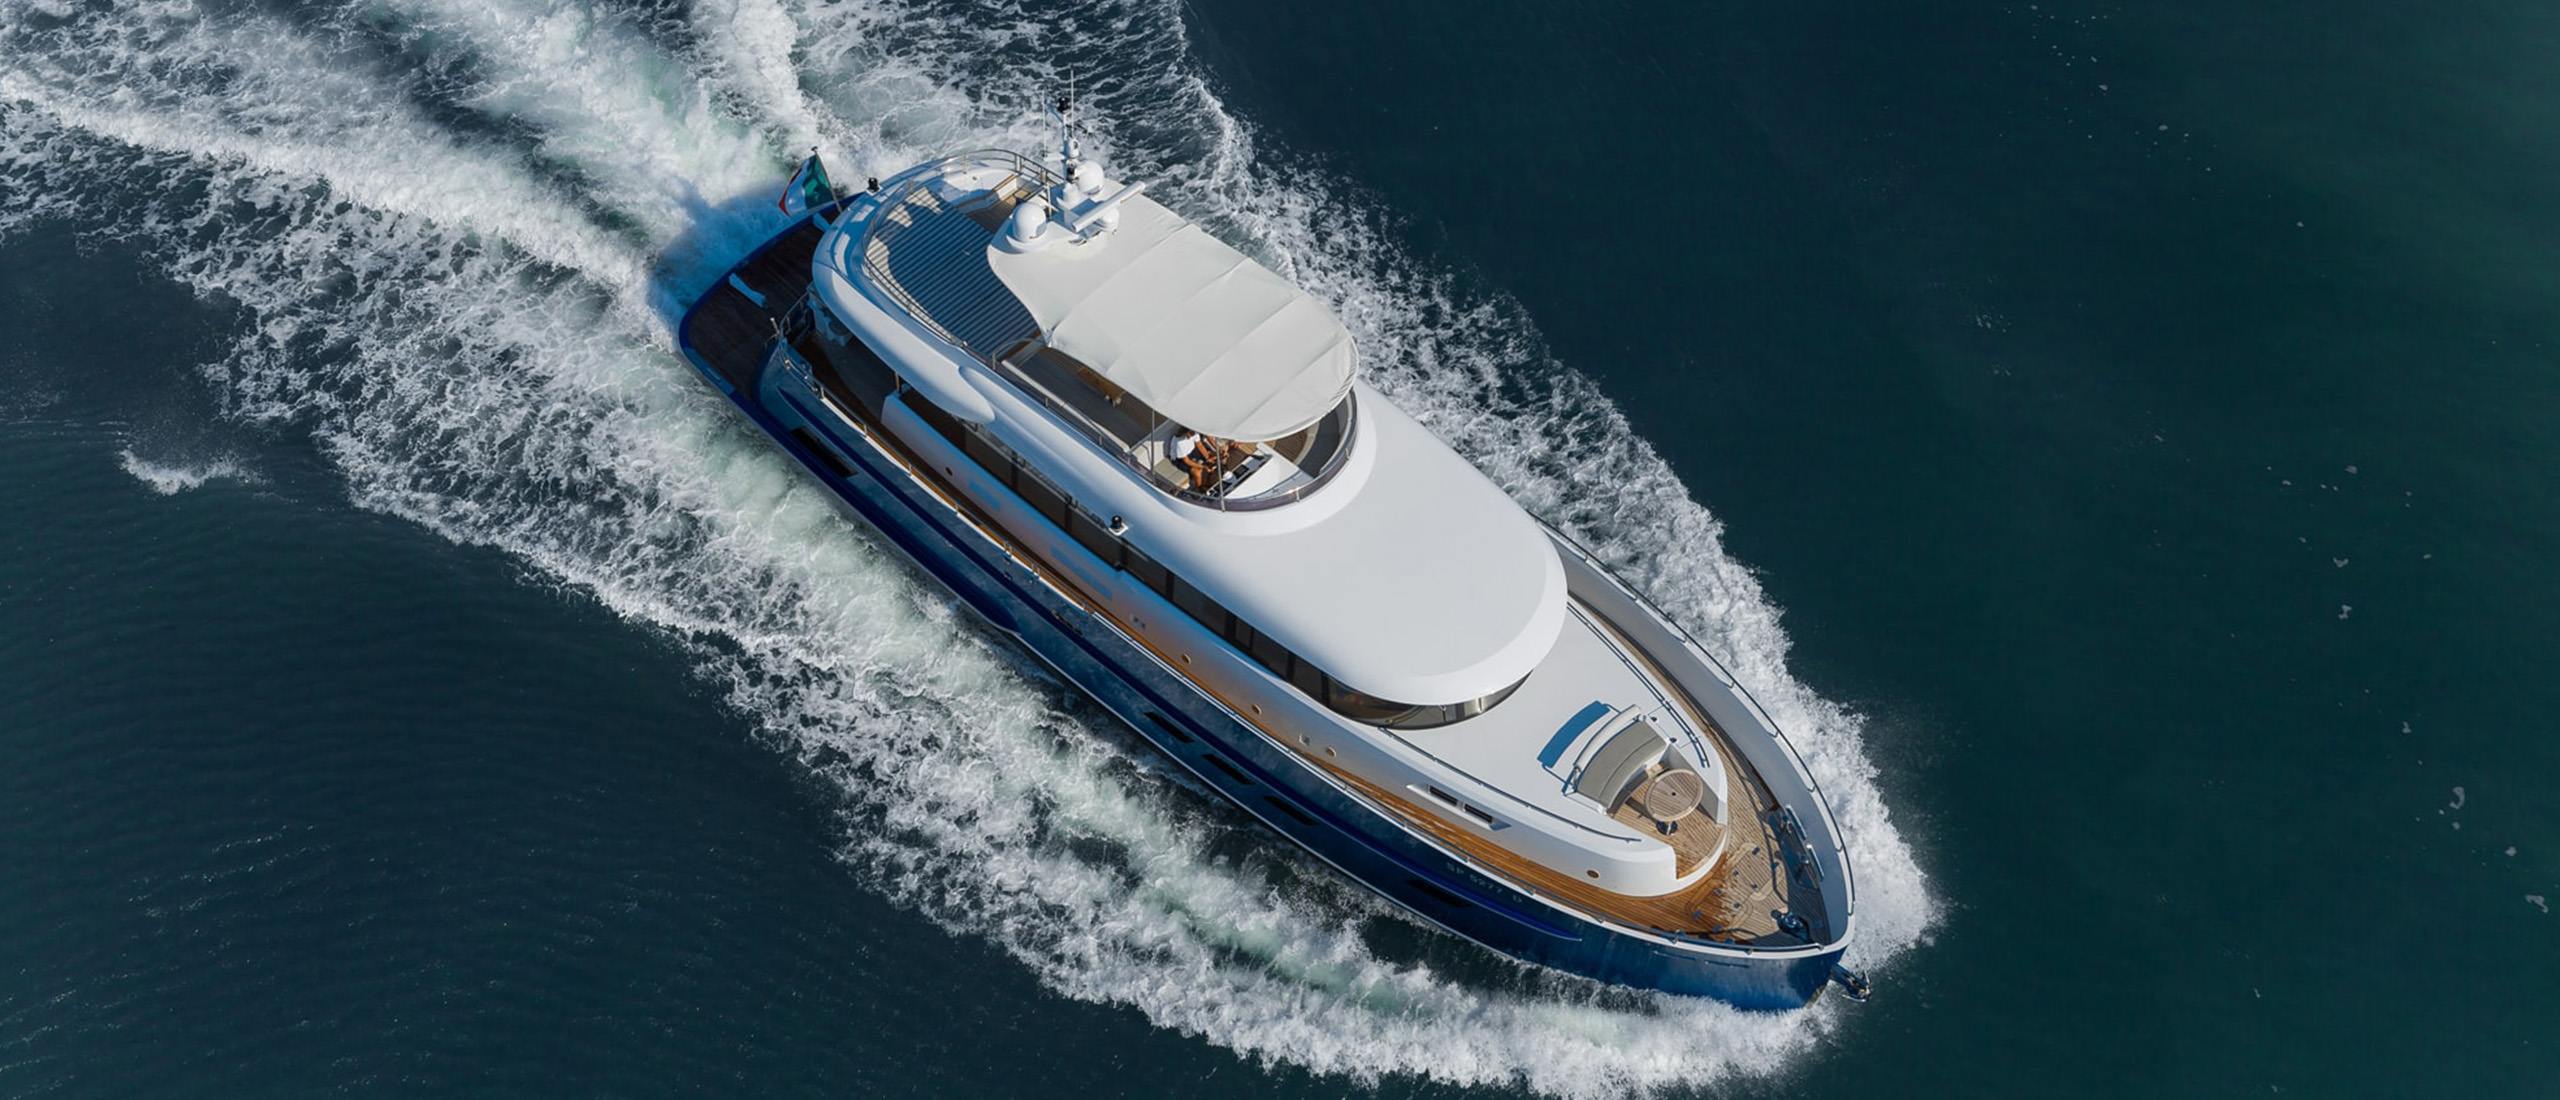 Vripack - Yacht Design - Gamma 20 - Eagle view - Exterior Design - Enjoying cruising the sea